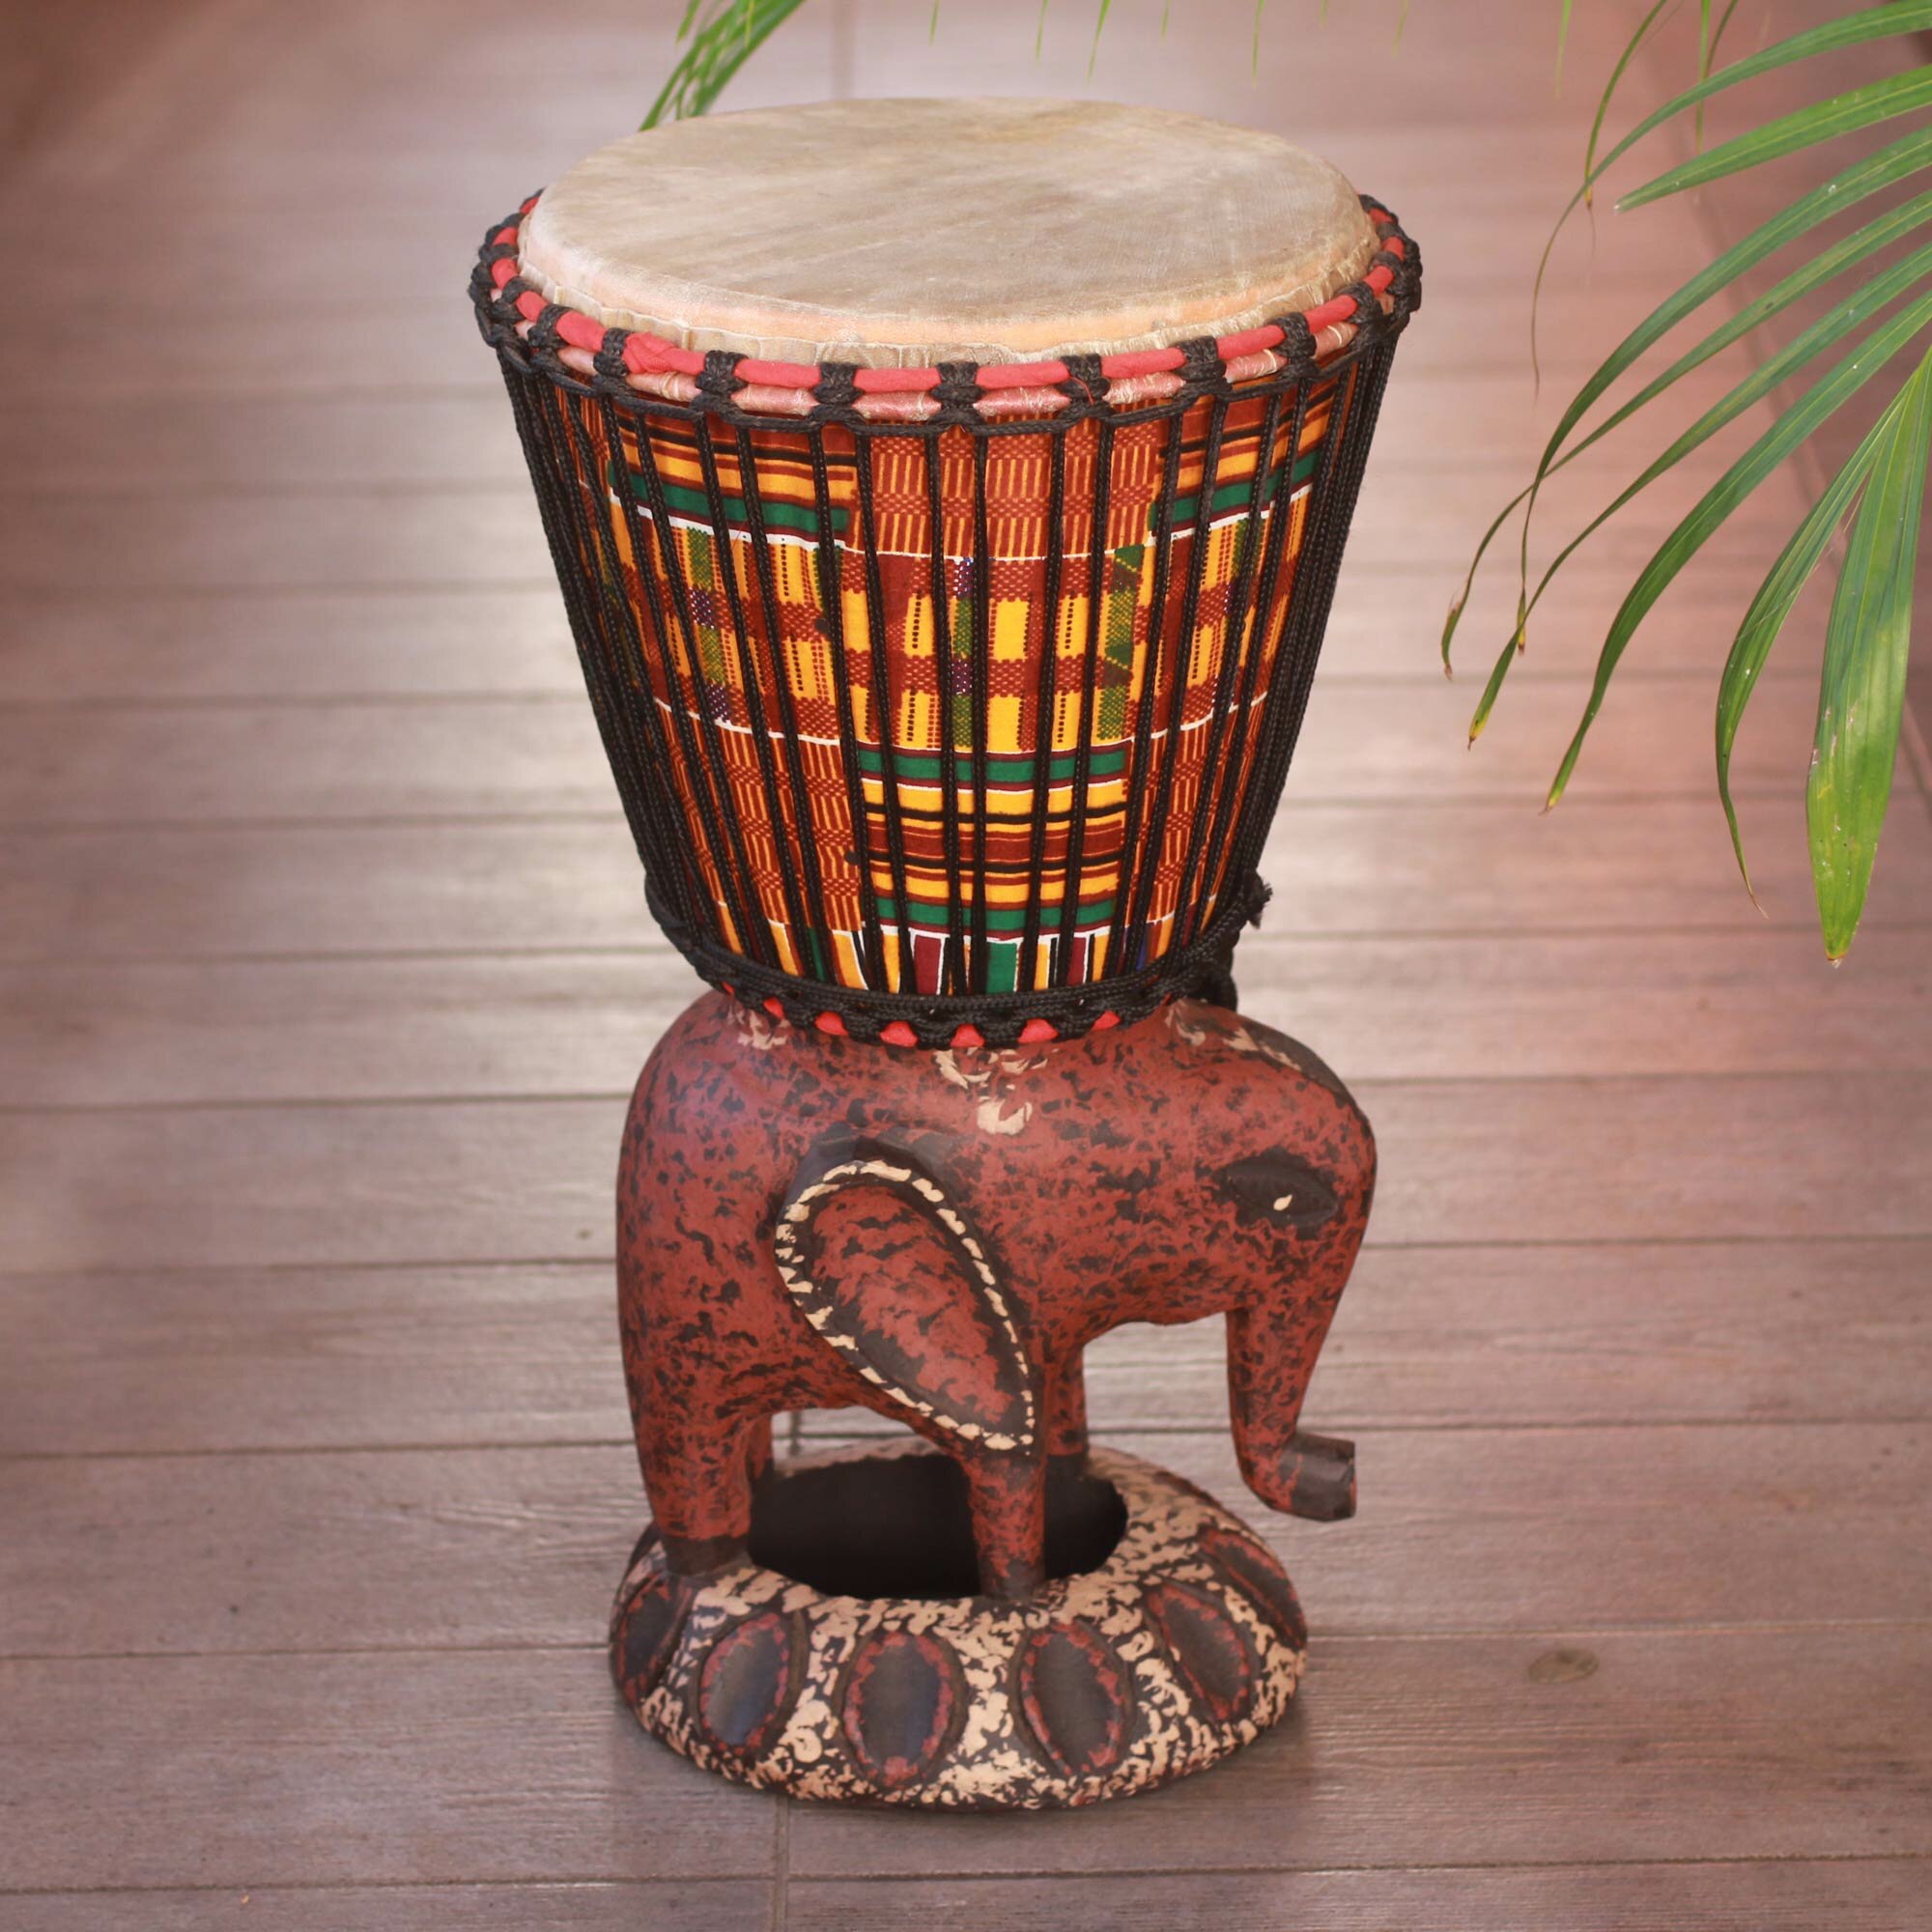 Litton Lane Brown Wood Handmade Djembe Drum Sculpture with Rope